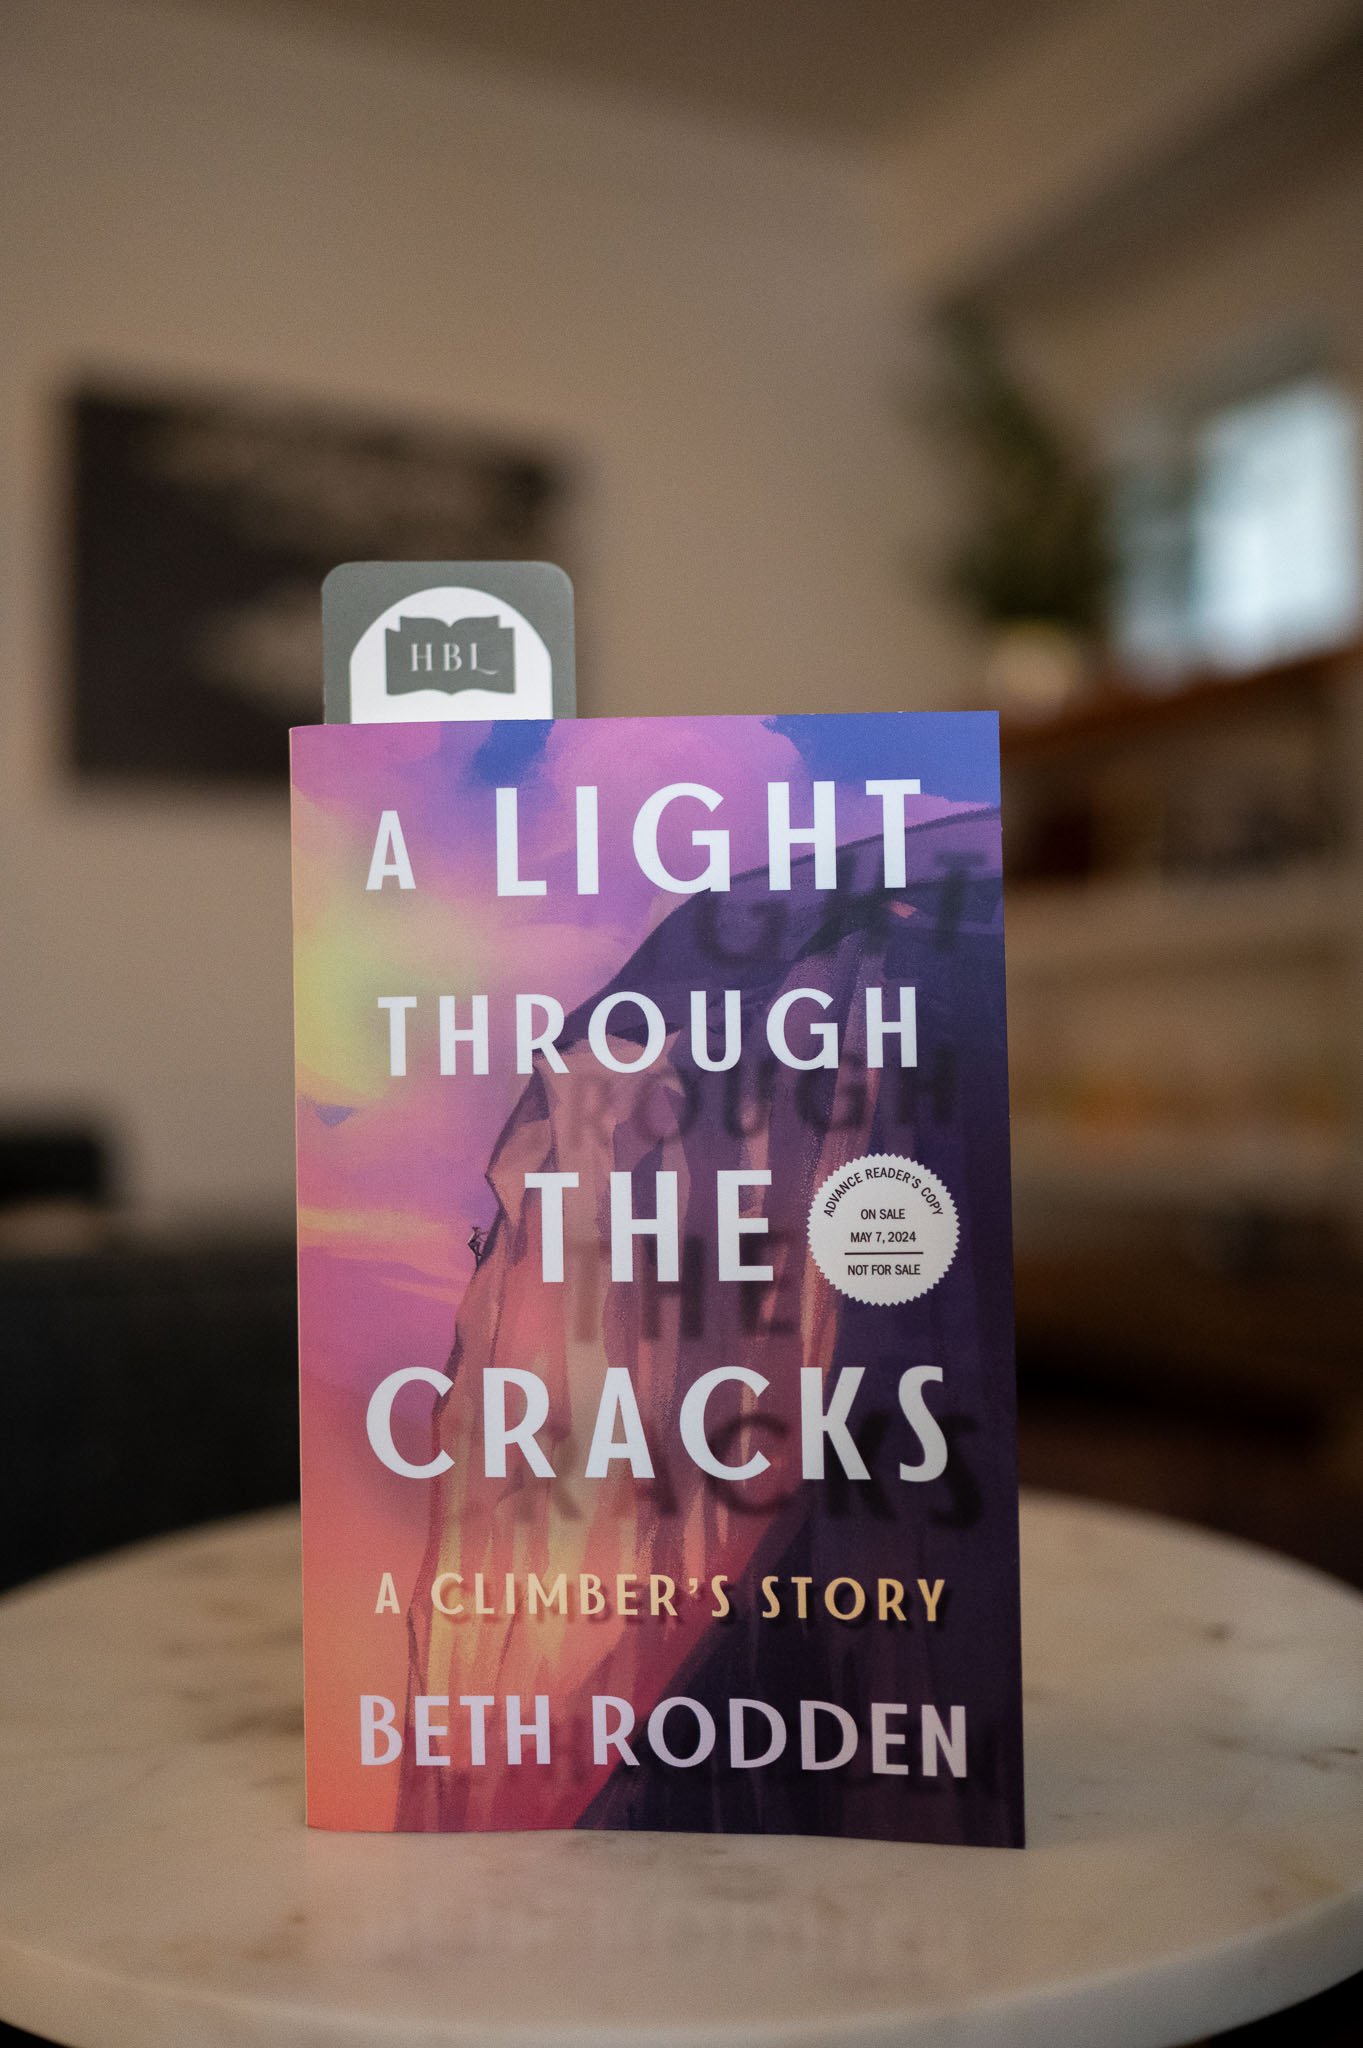 A Light Through the Cracks by Beth Rodden